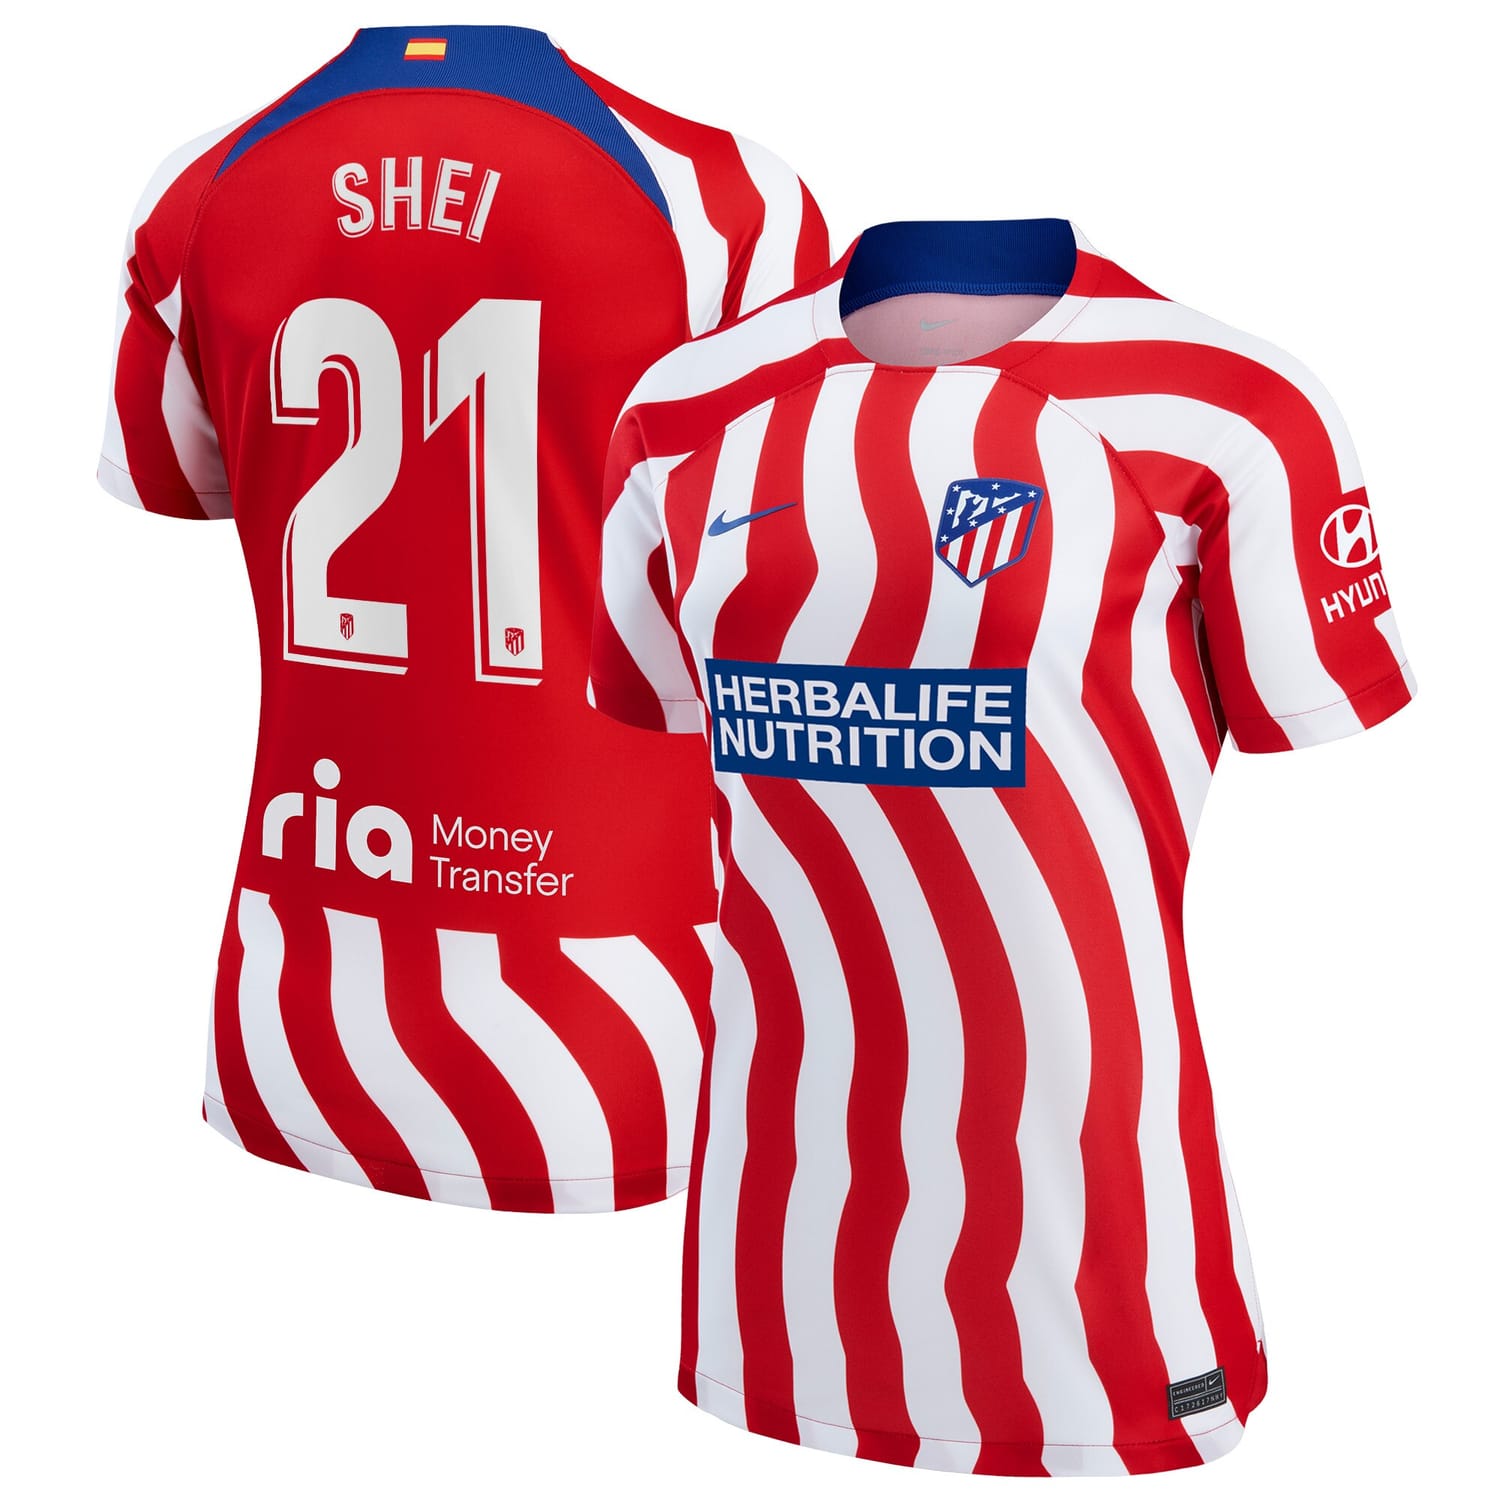 La Liga Atletico de Madrid Home Jersey Shirt 2022-23 player Sheila García 21 printing for Women